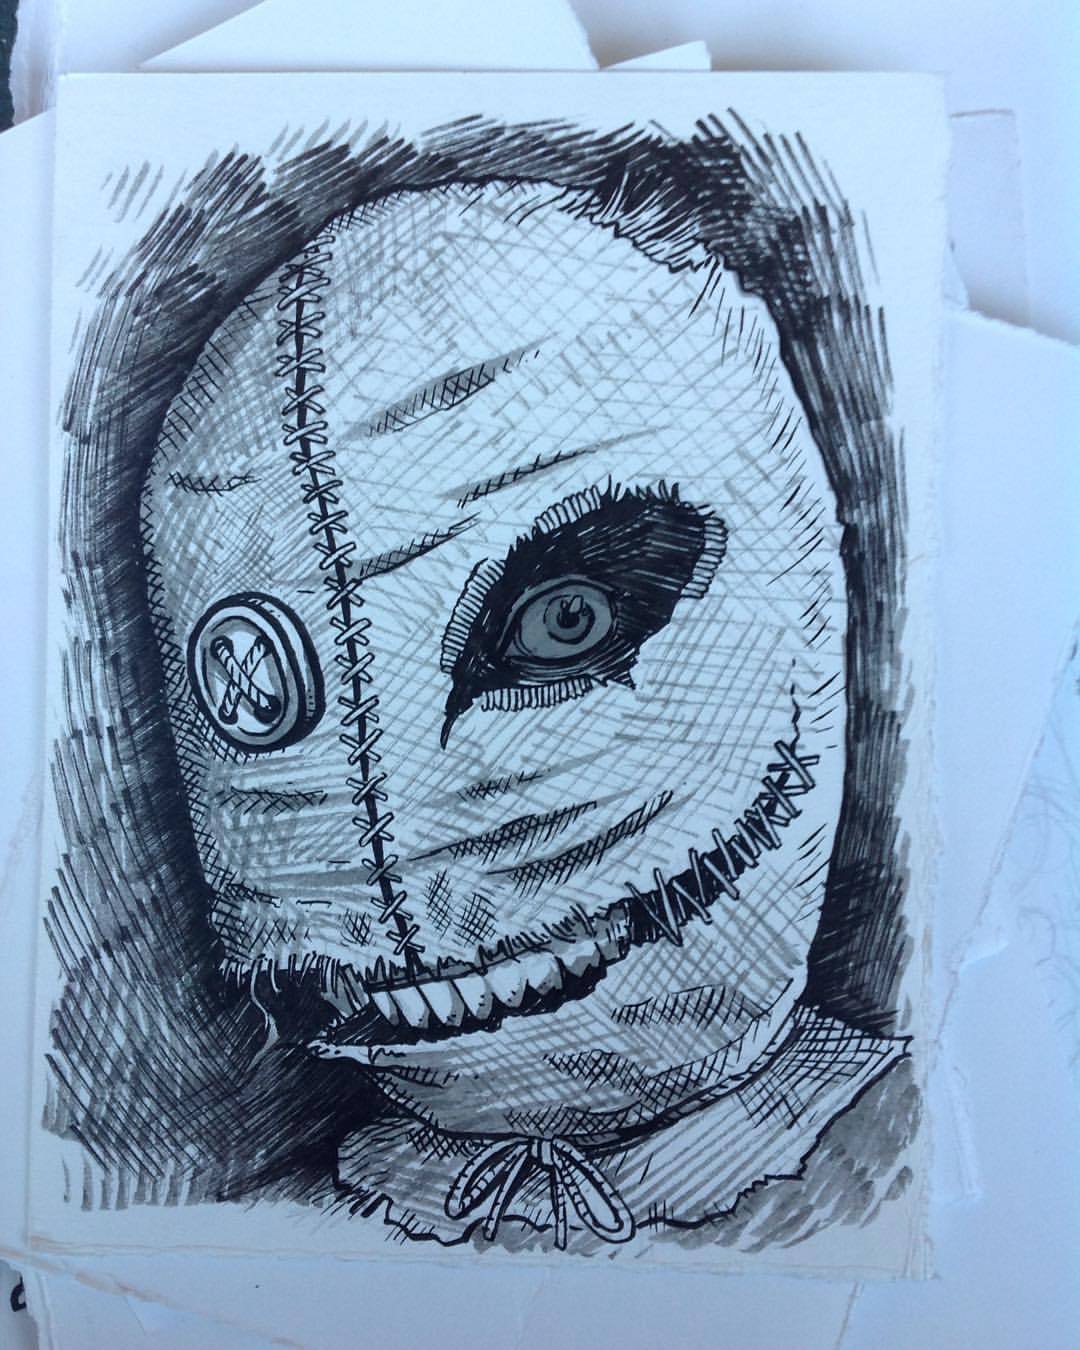 Day 18 of #drawlloween is a Mask. #sketch #sketches #sketchbook #drawing #doodle #halloween #scary #creepy #monster #ink #inkwash #inktober